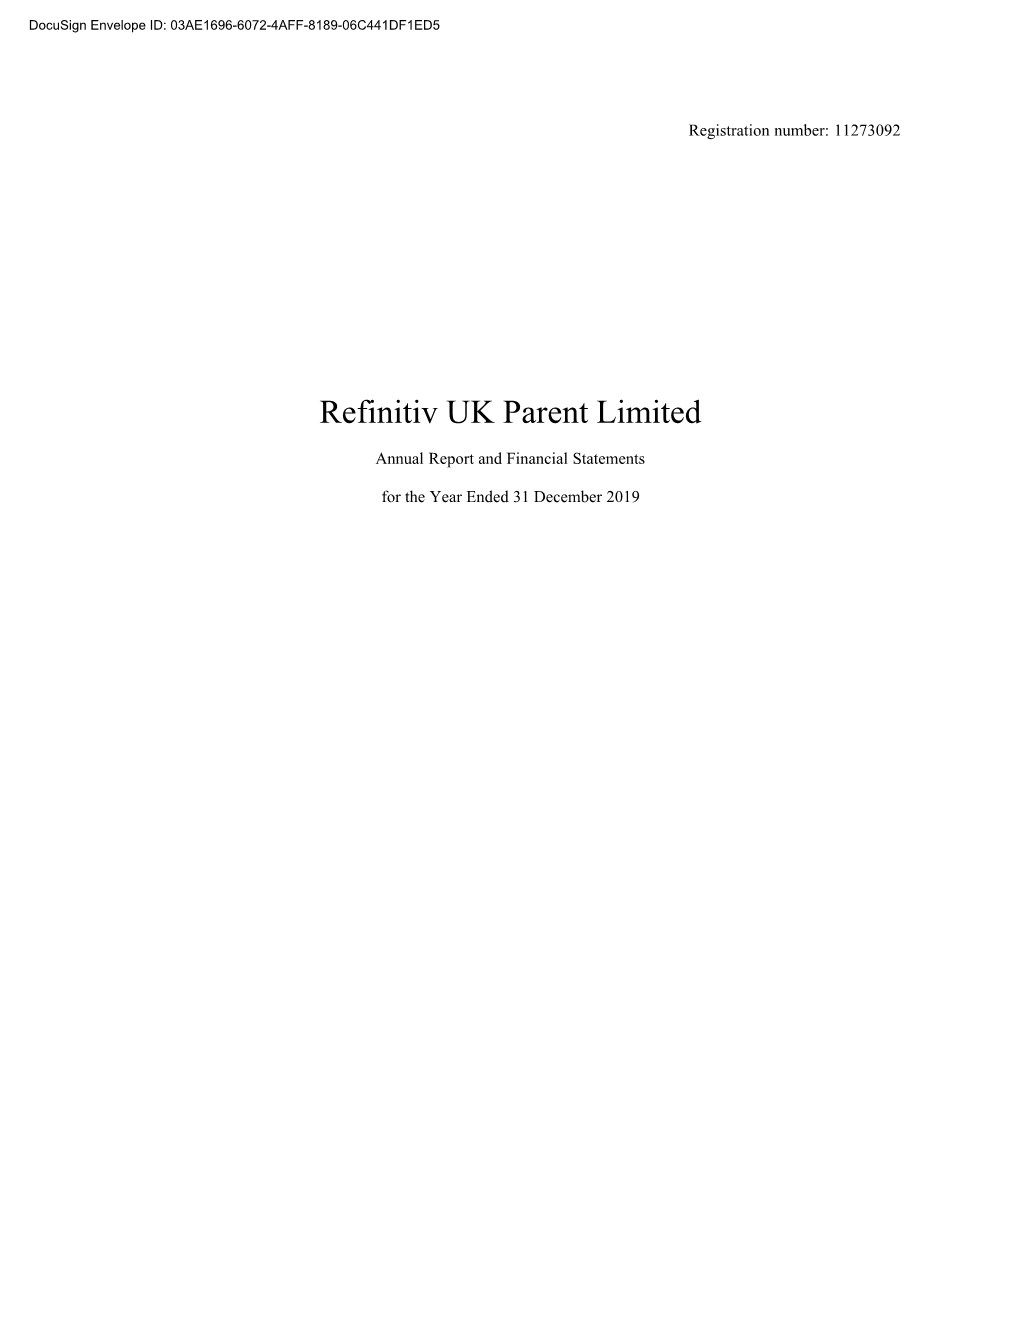 Refinitiv UK Parent Limited